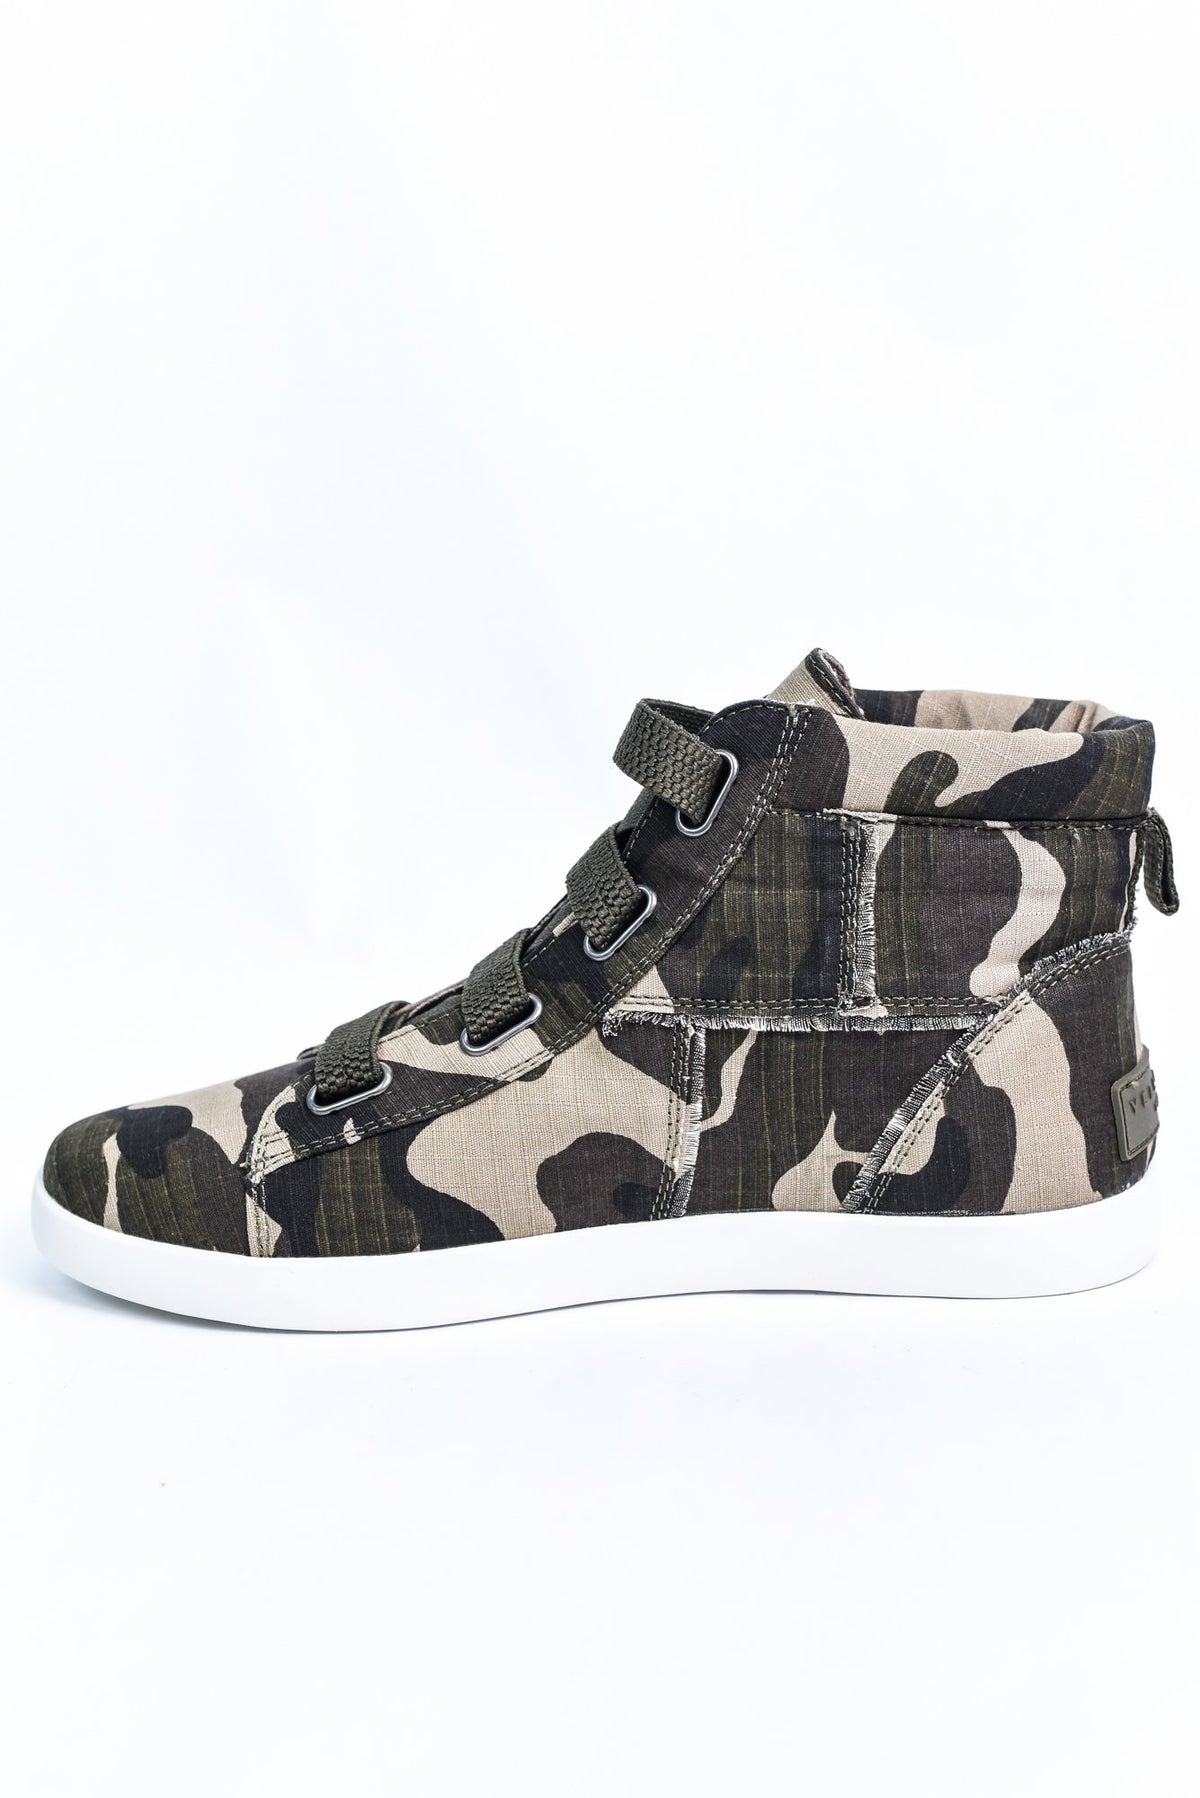 Easy Street Camouflage Slip On Sneakers - SHO1918CA